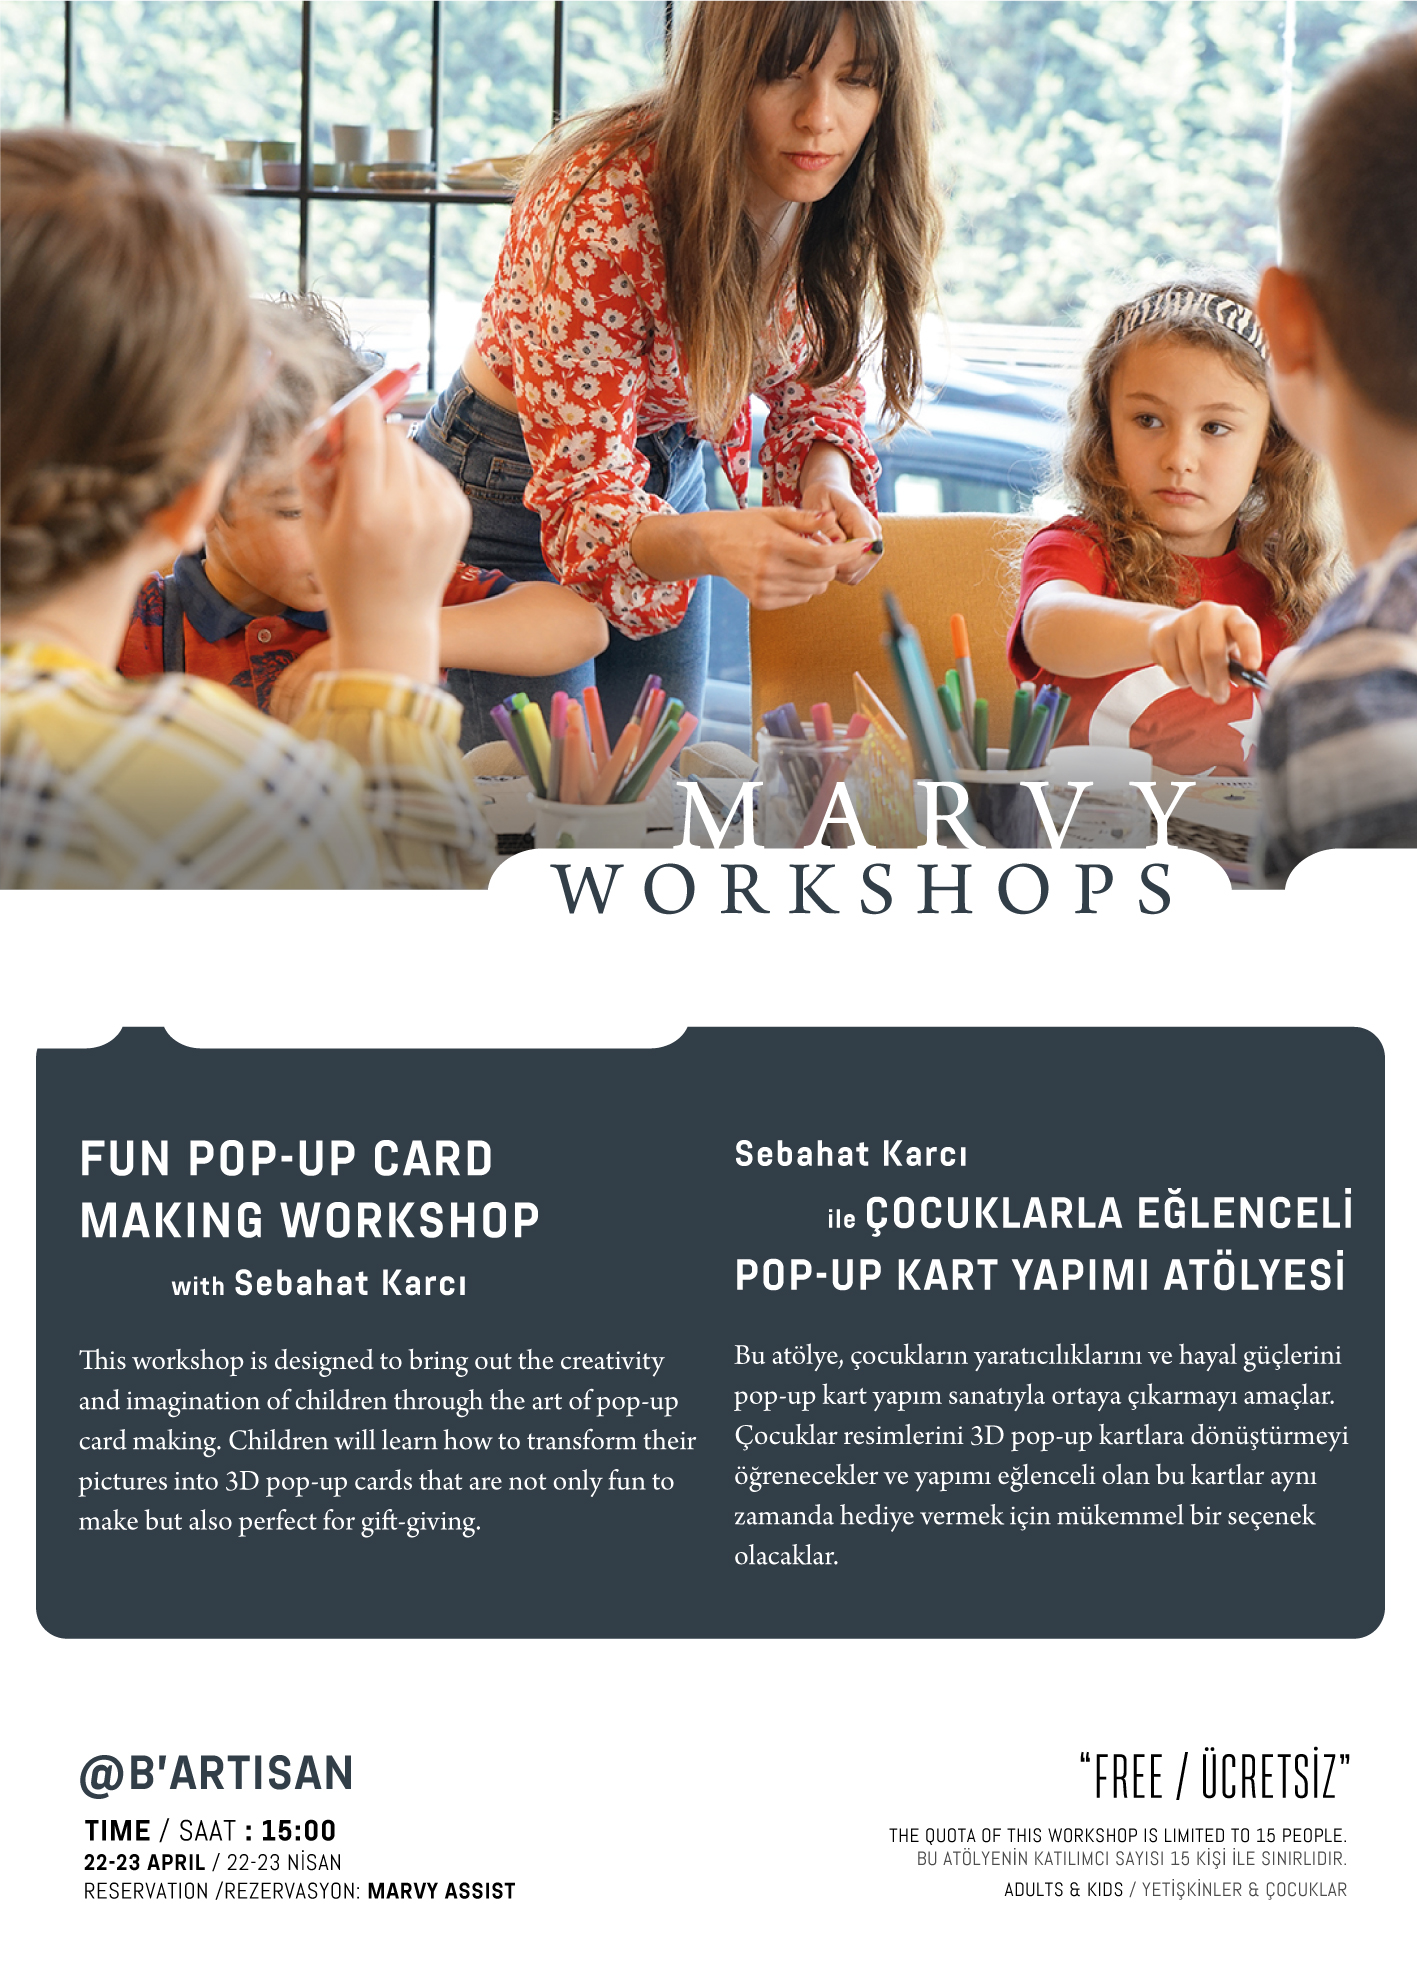 Fun Pop-up Card Making Workshop with Sebahat Karcı